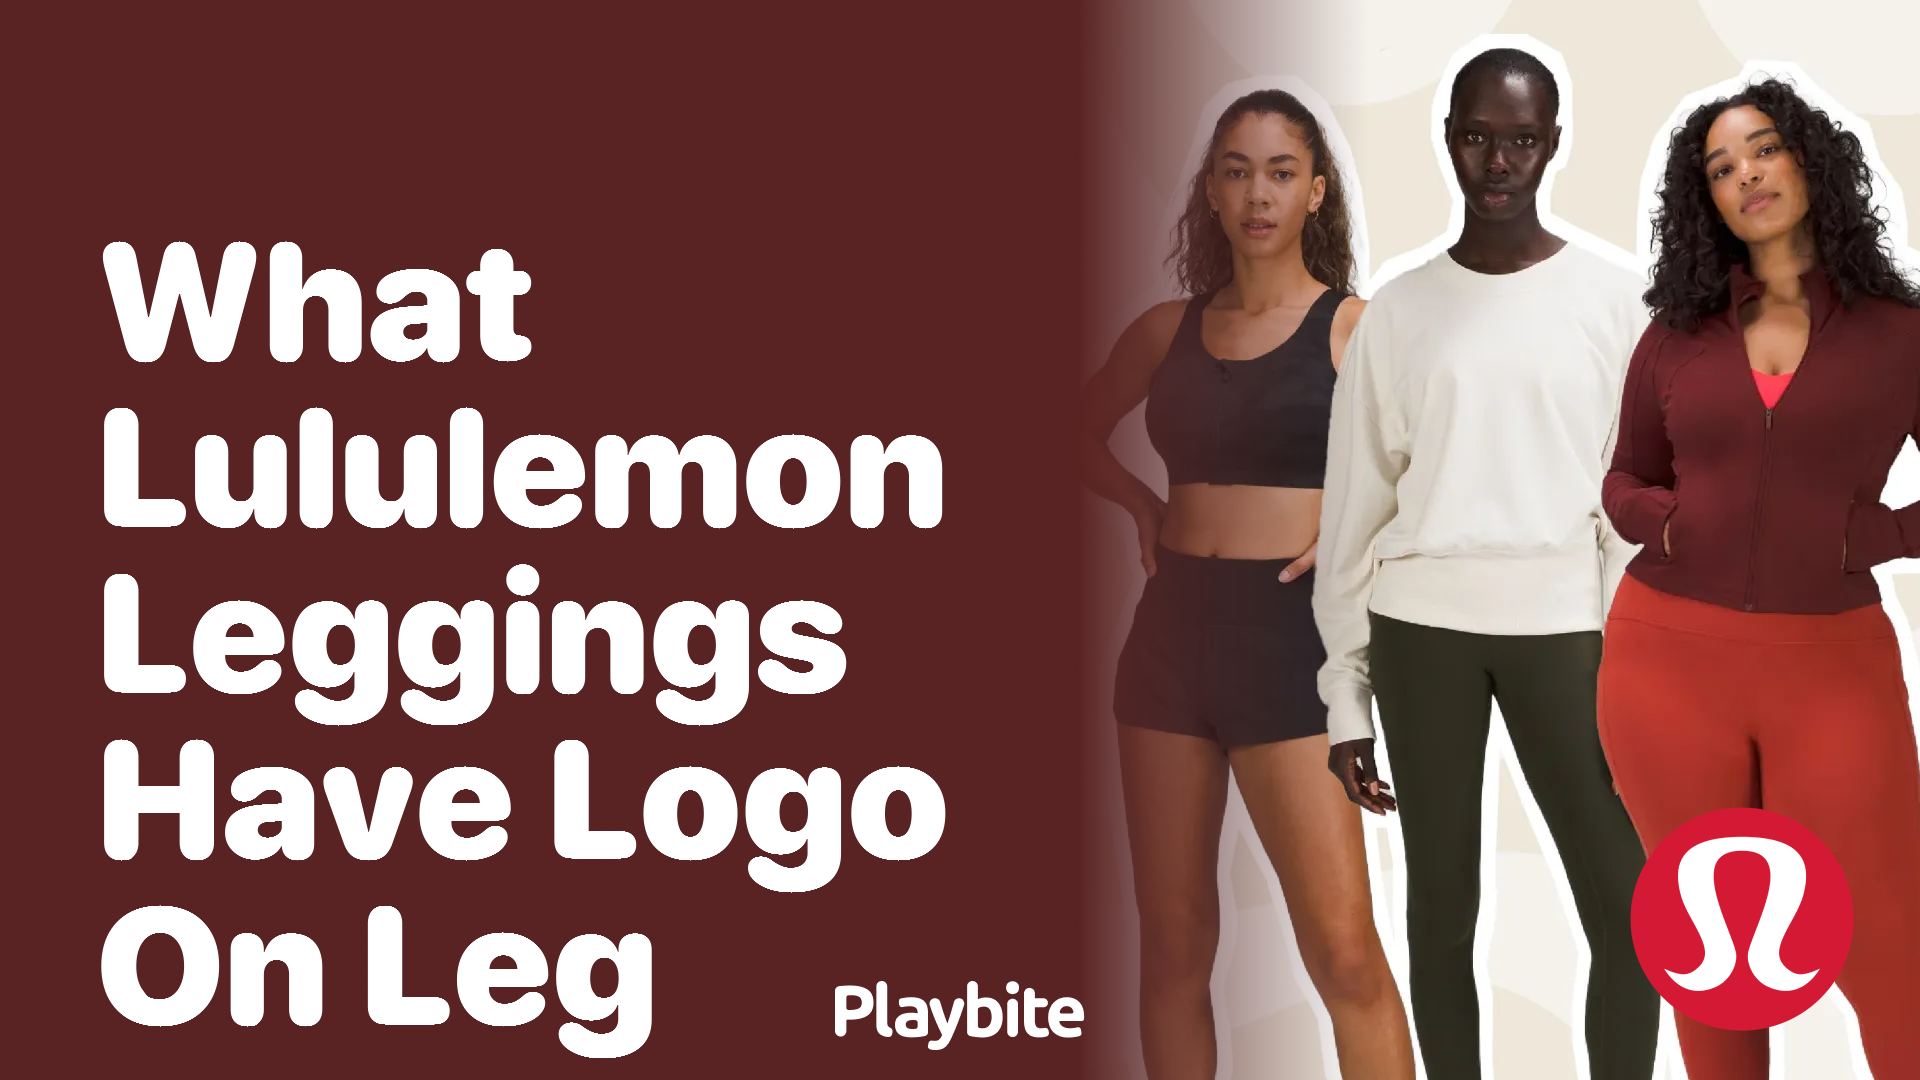 Lululemon Leggings With Logo On Calf